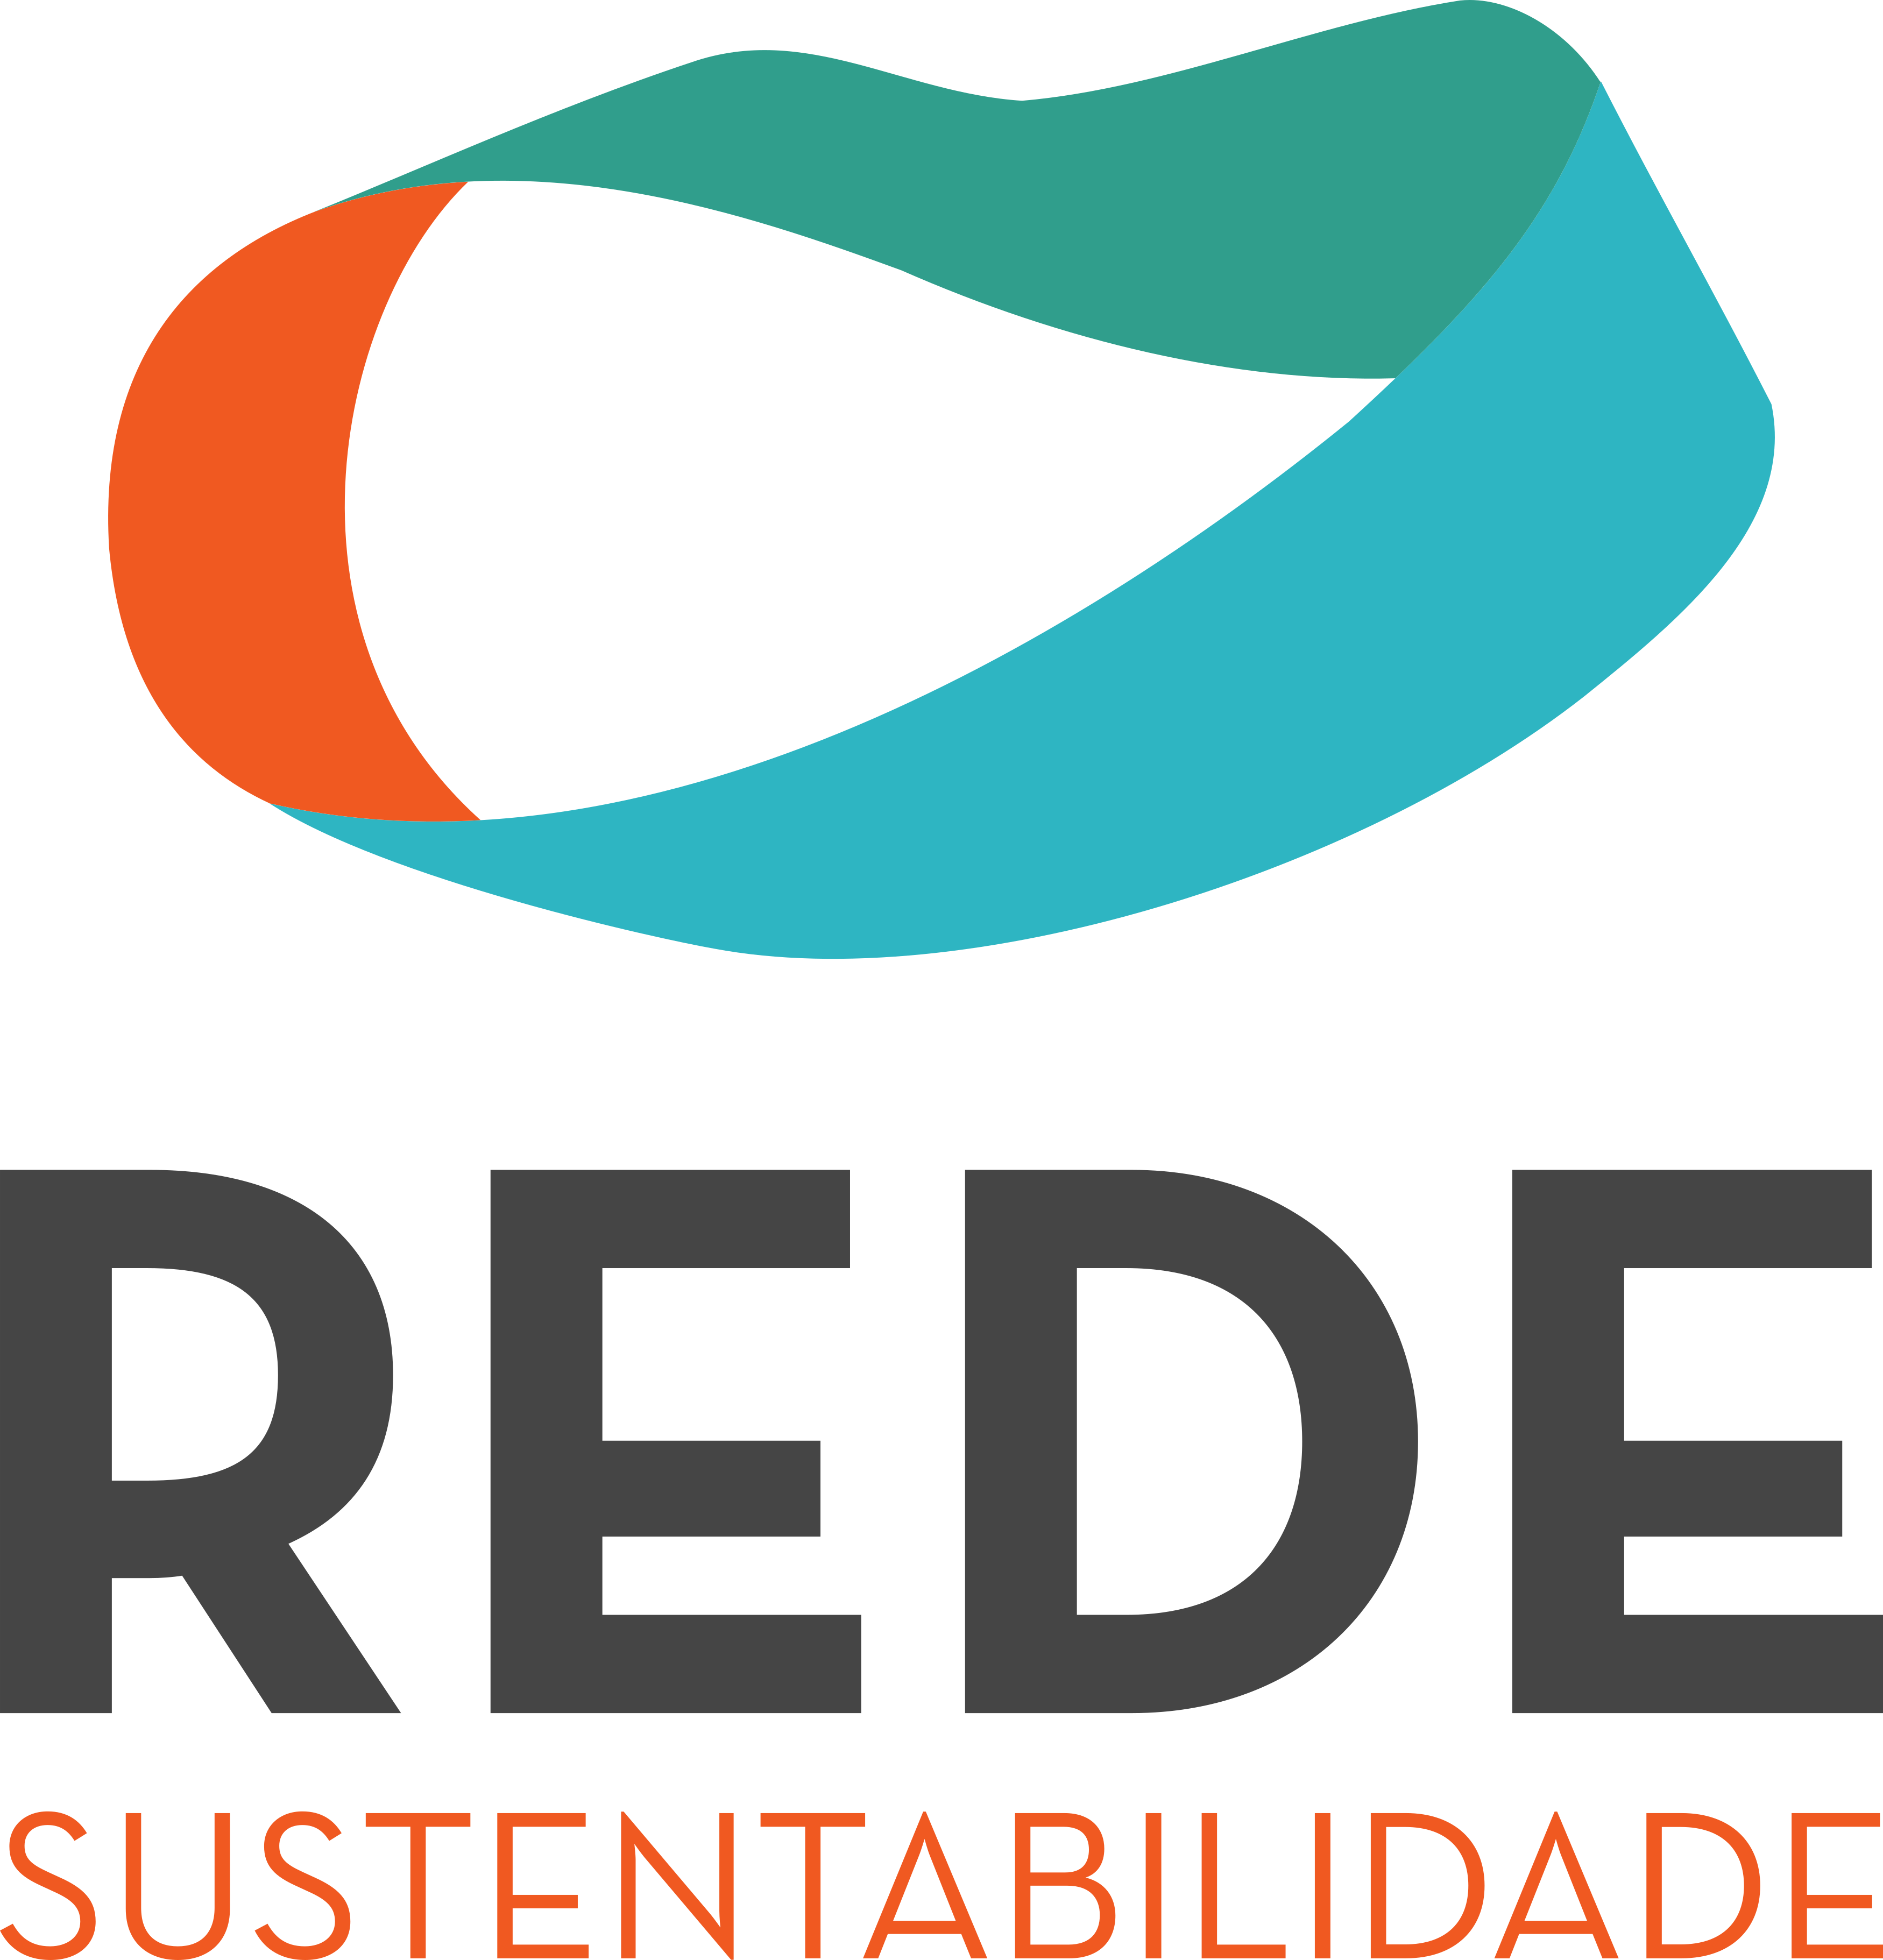 Rede Sustentabilidade Logo.